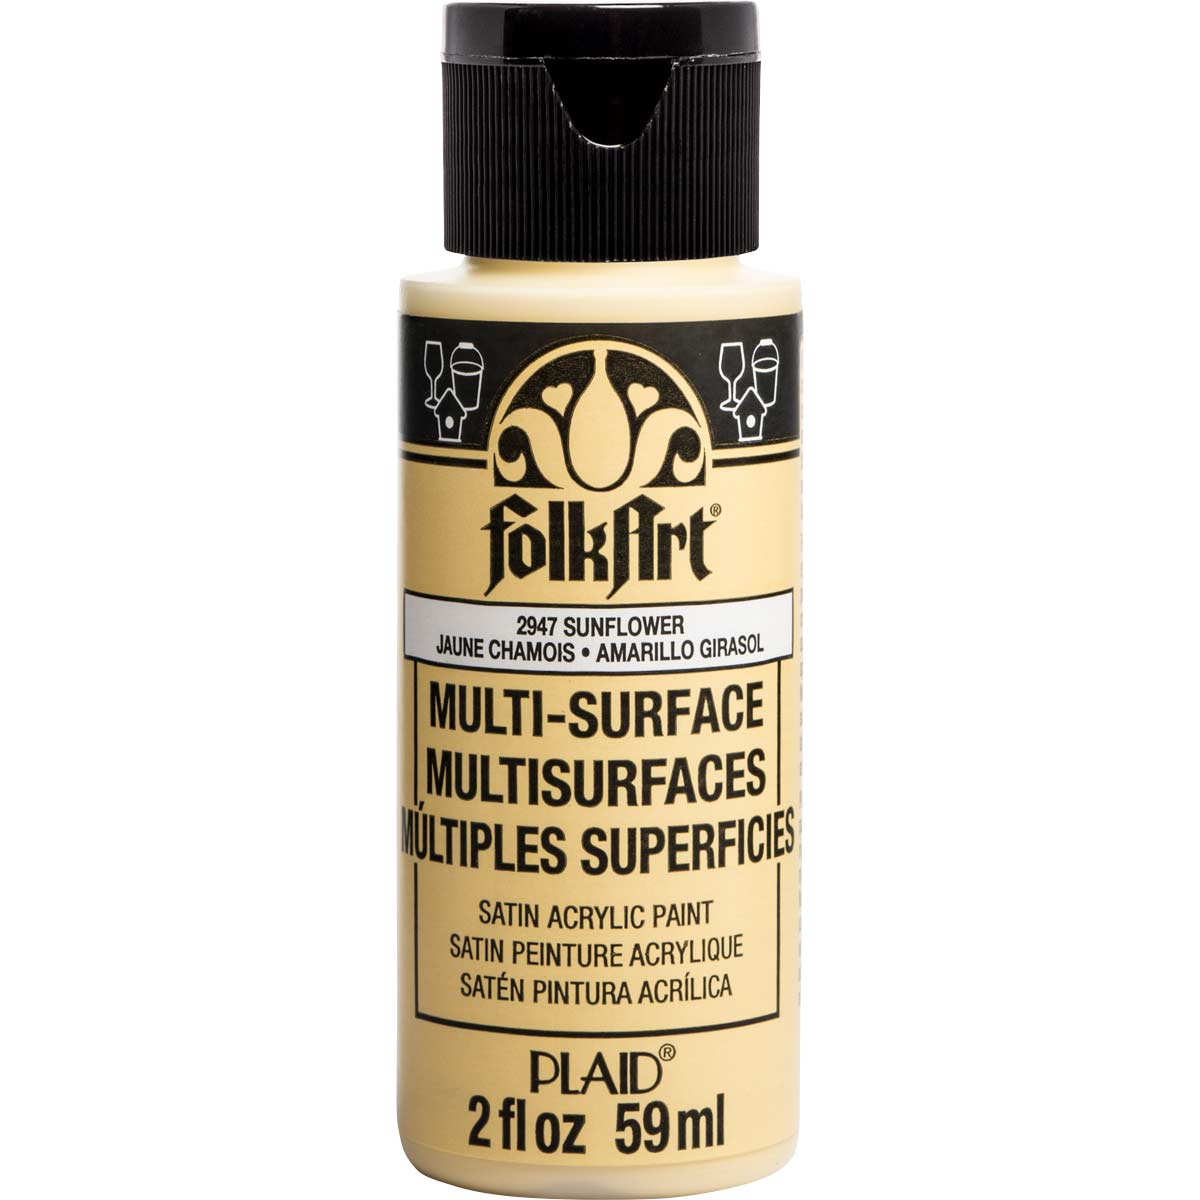 FolkArt ® Multi-Surface Satin Acrylic Paints - Sunflower, 2 oz. - 2947